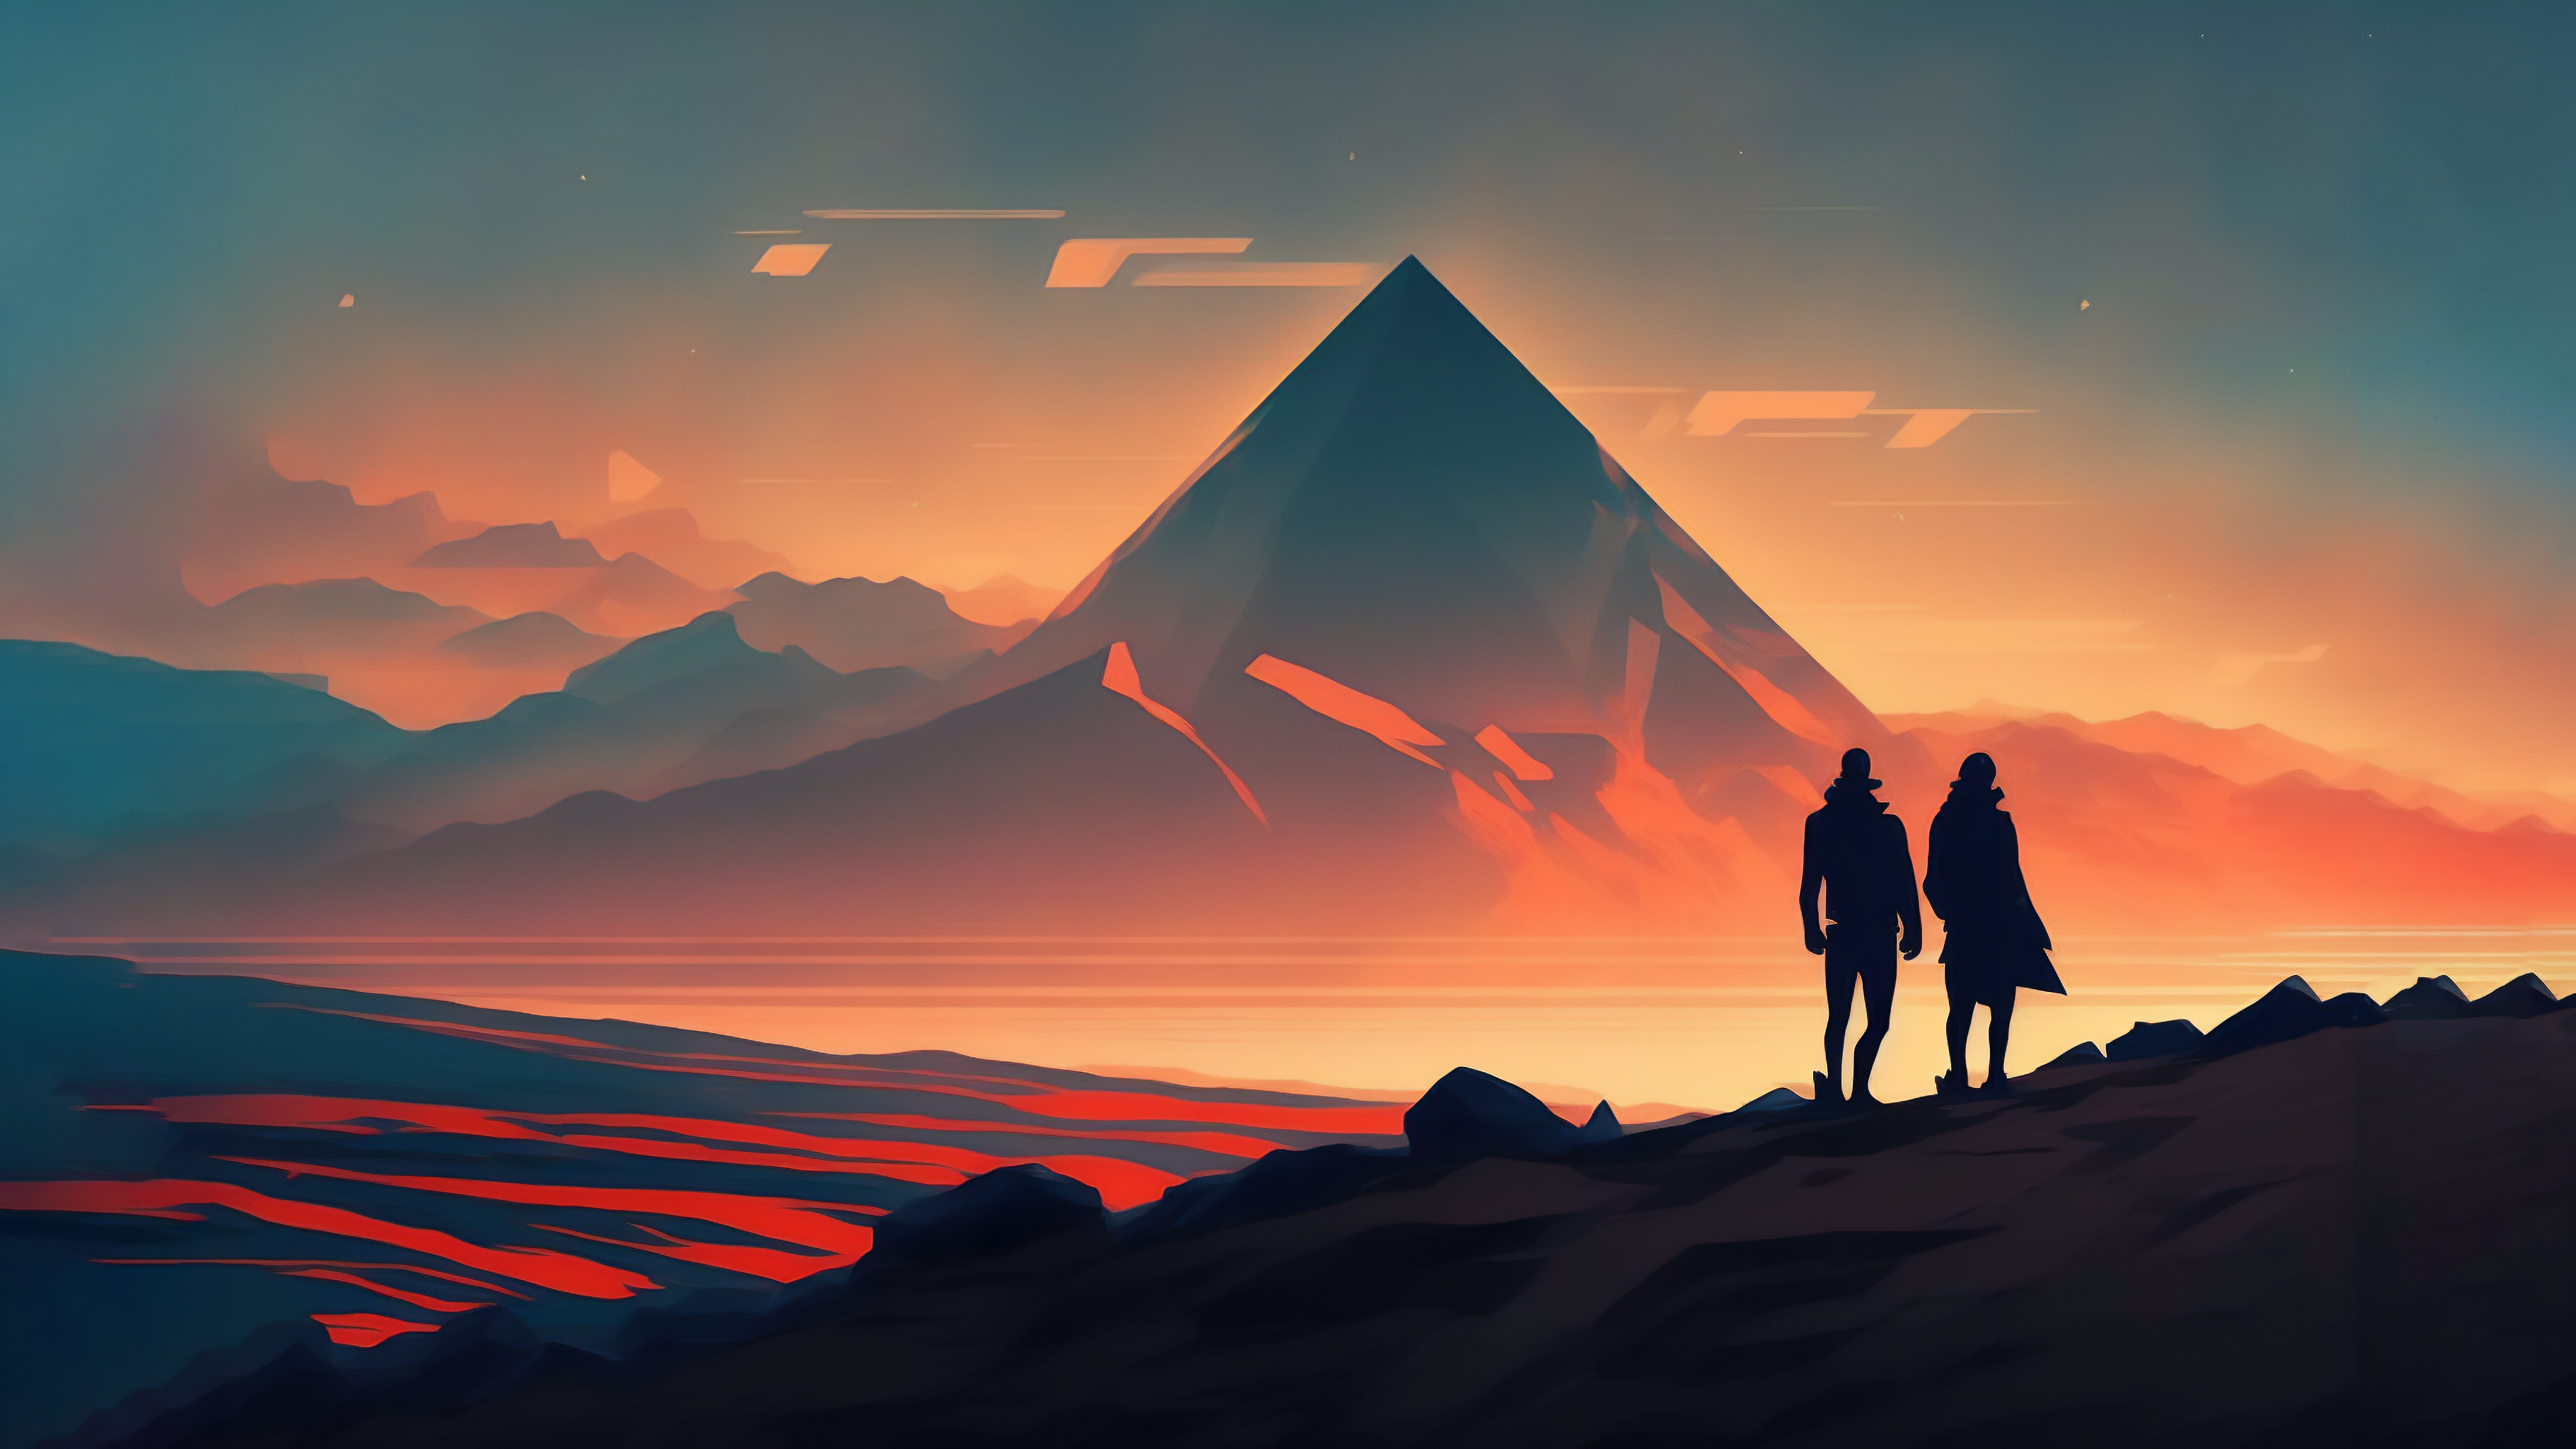 General 3640x2048 science fiction AI art mountains illustration pyramid couple sunset exploring